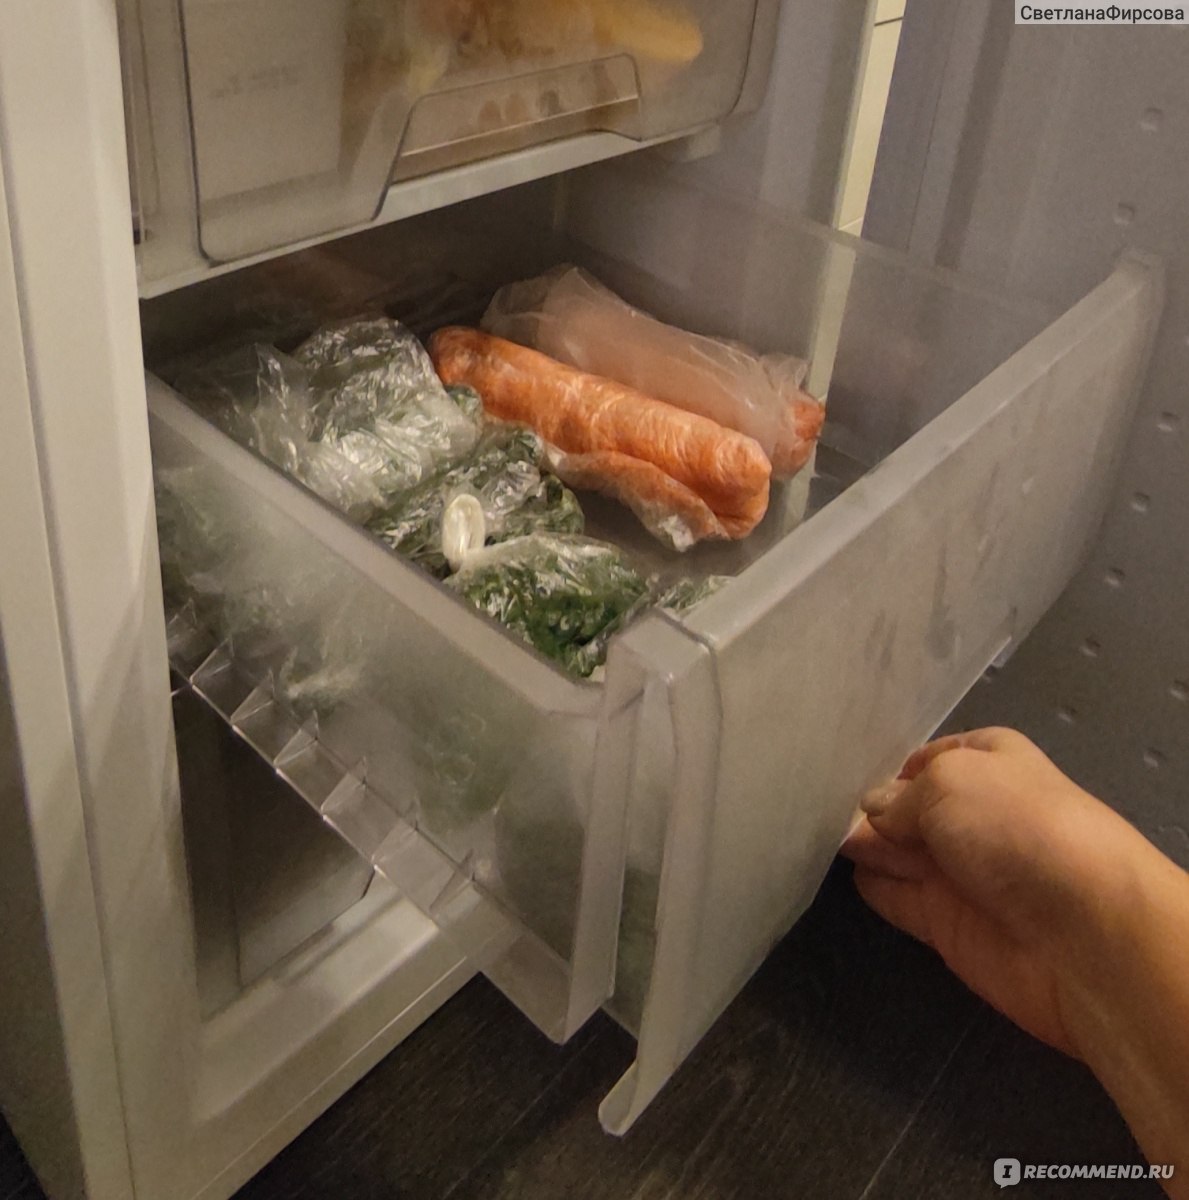 Морозильный шкаф dexp sf100m характеристики